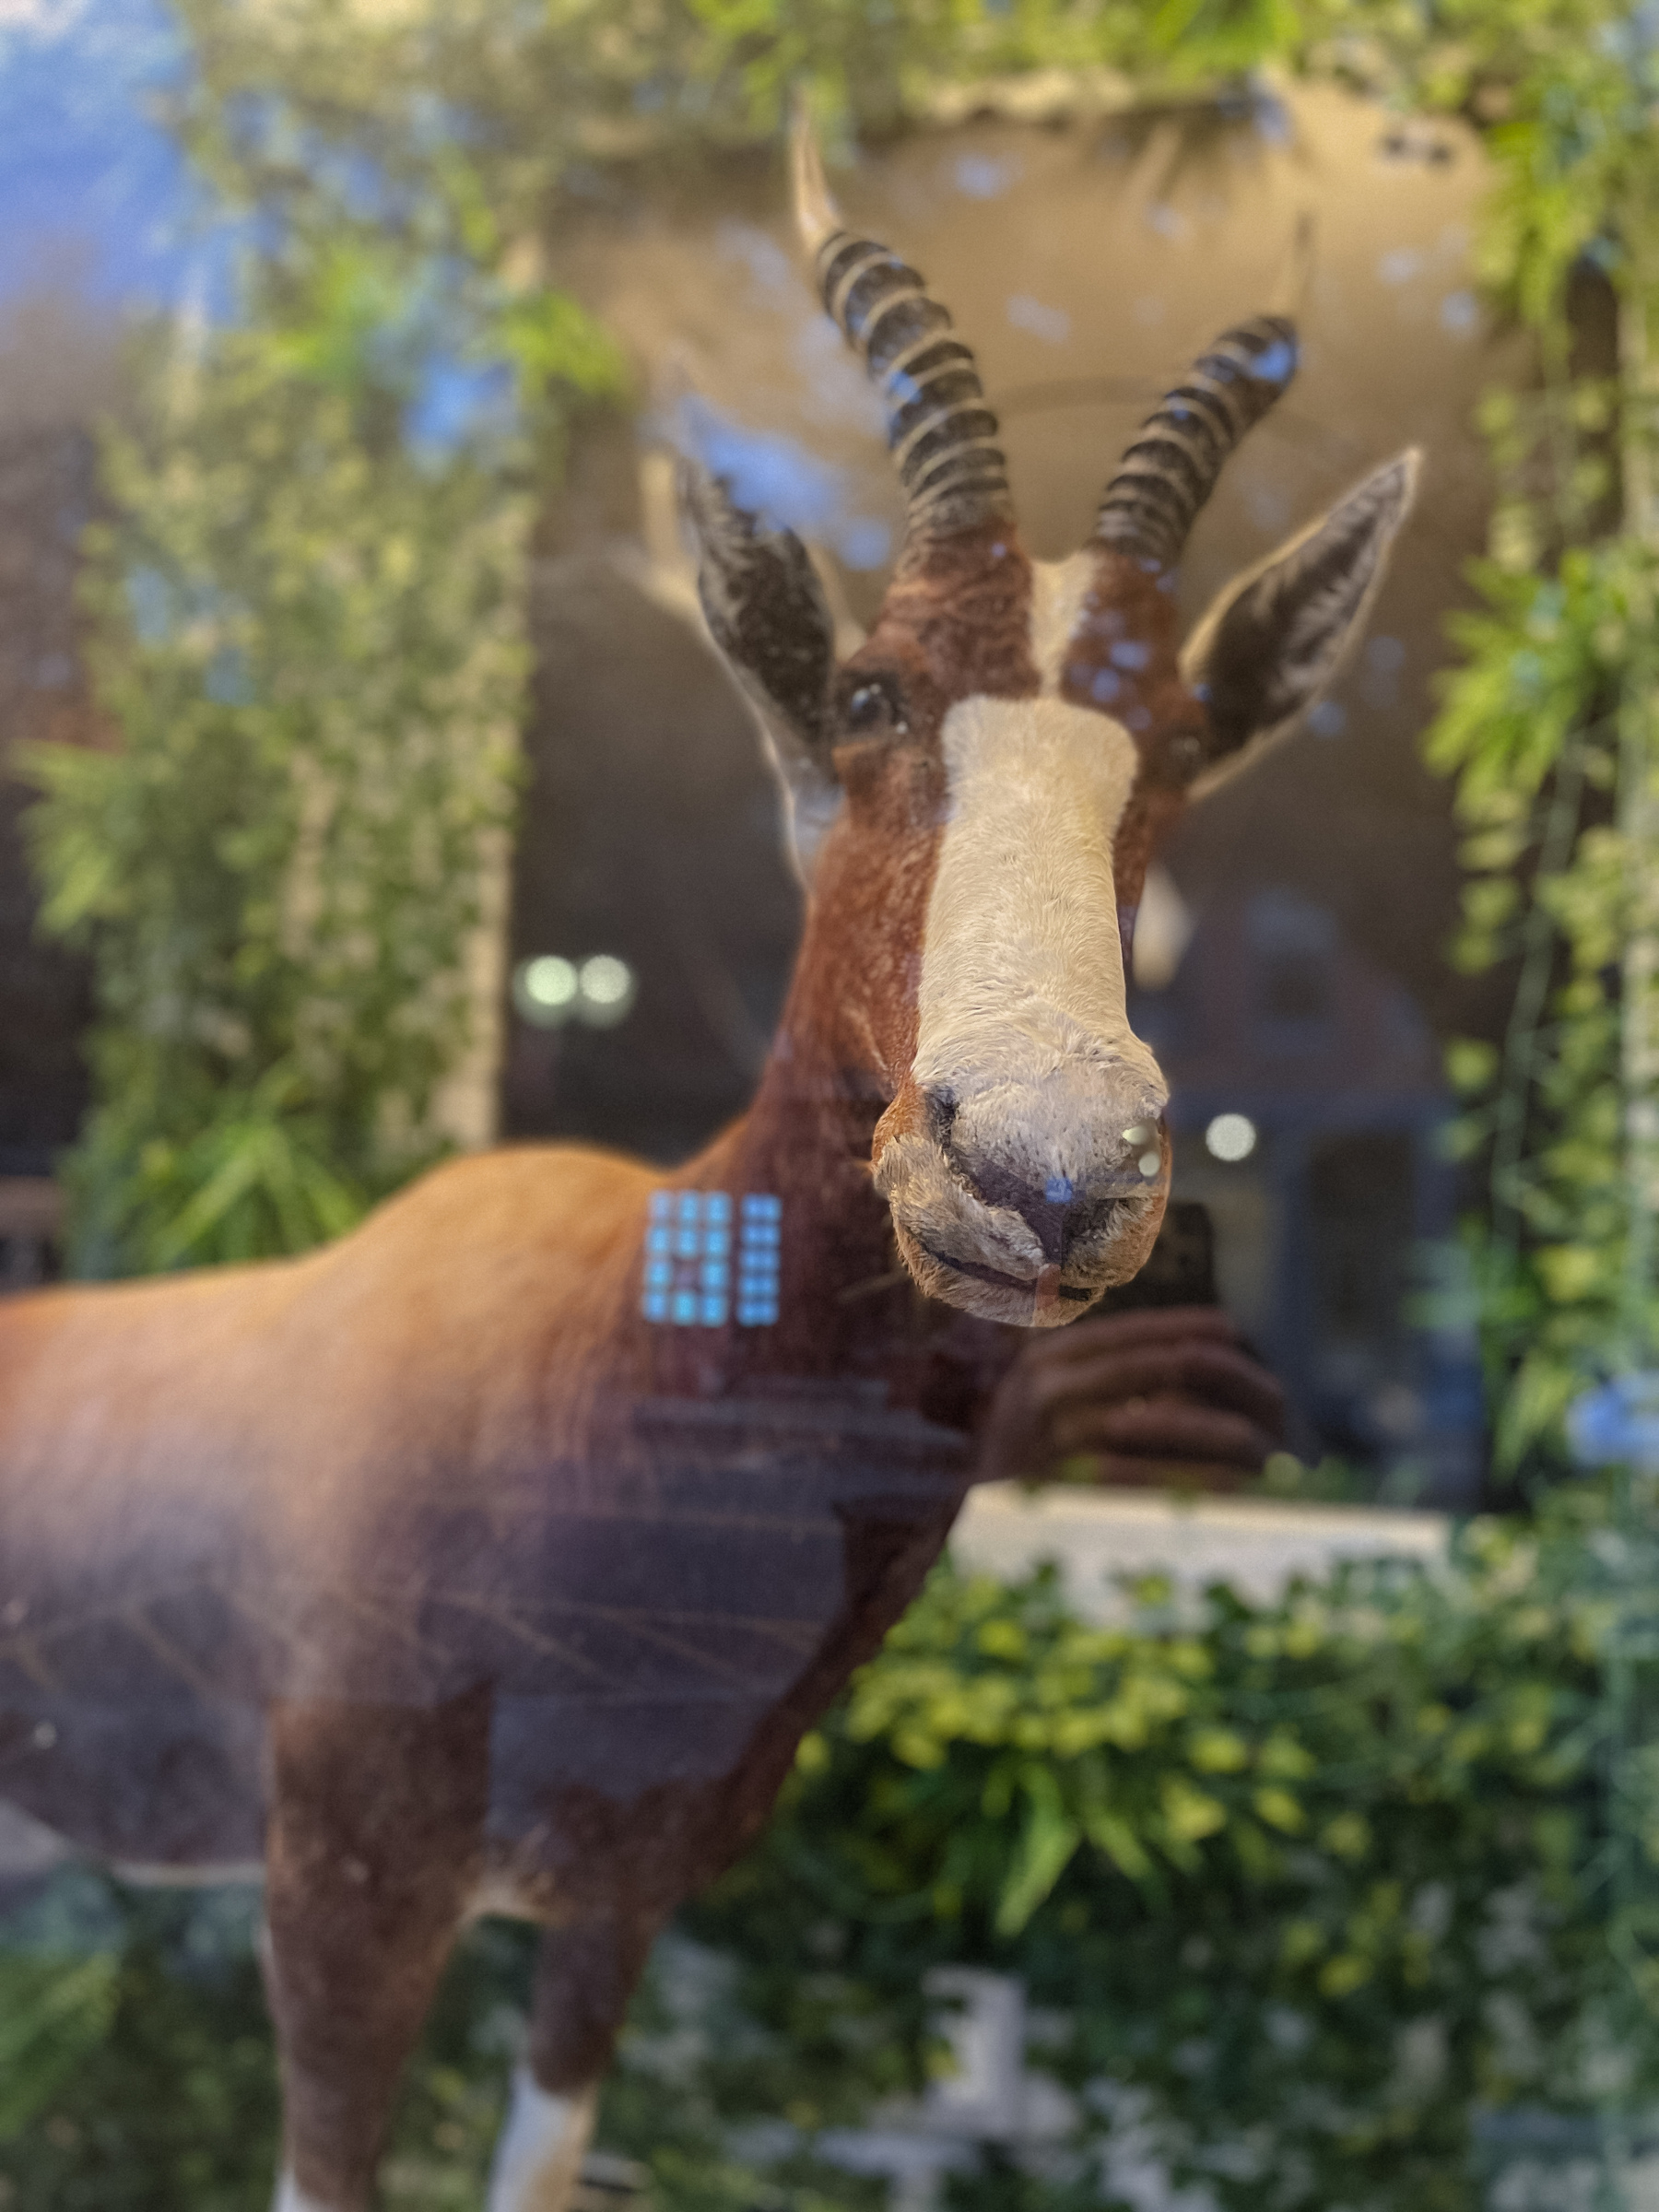 Stuffed antelope animal in shop window.